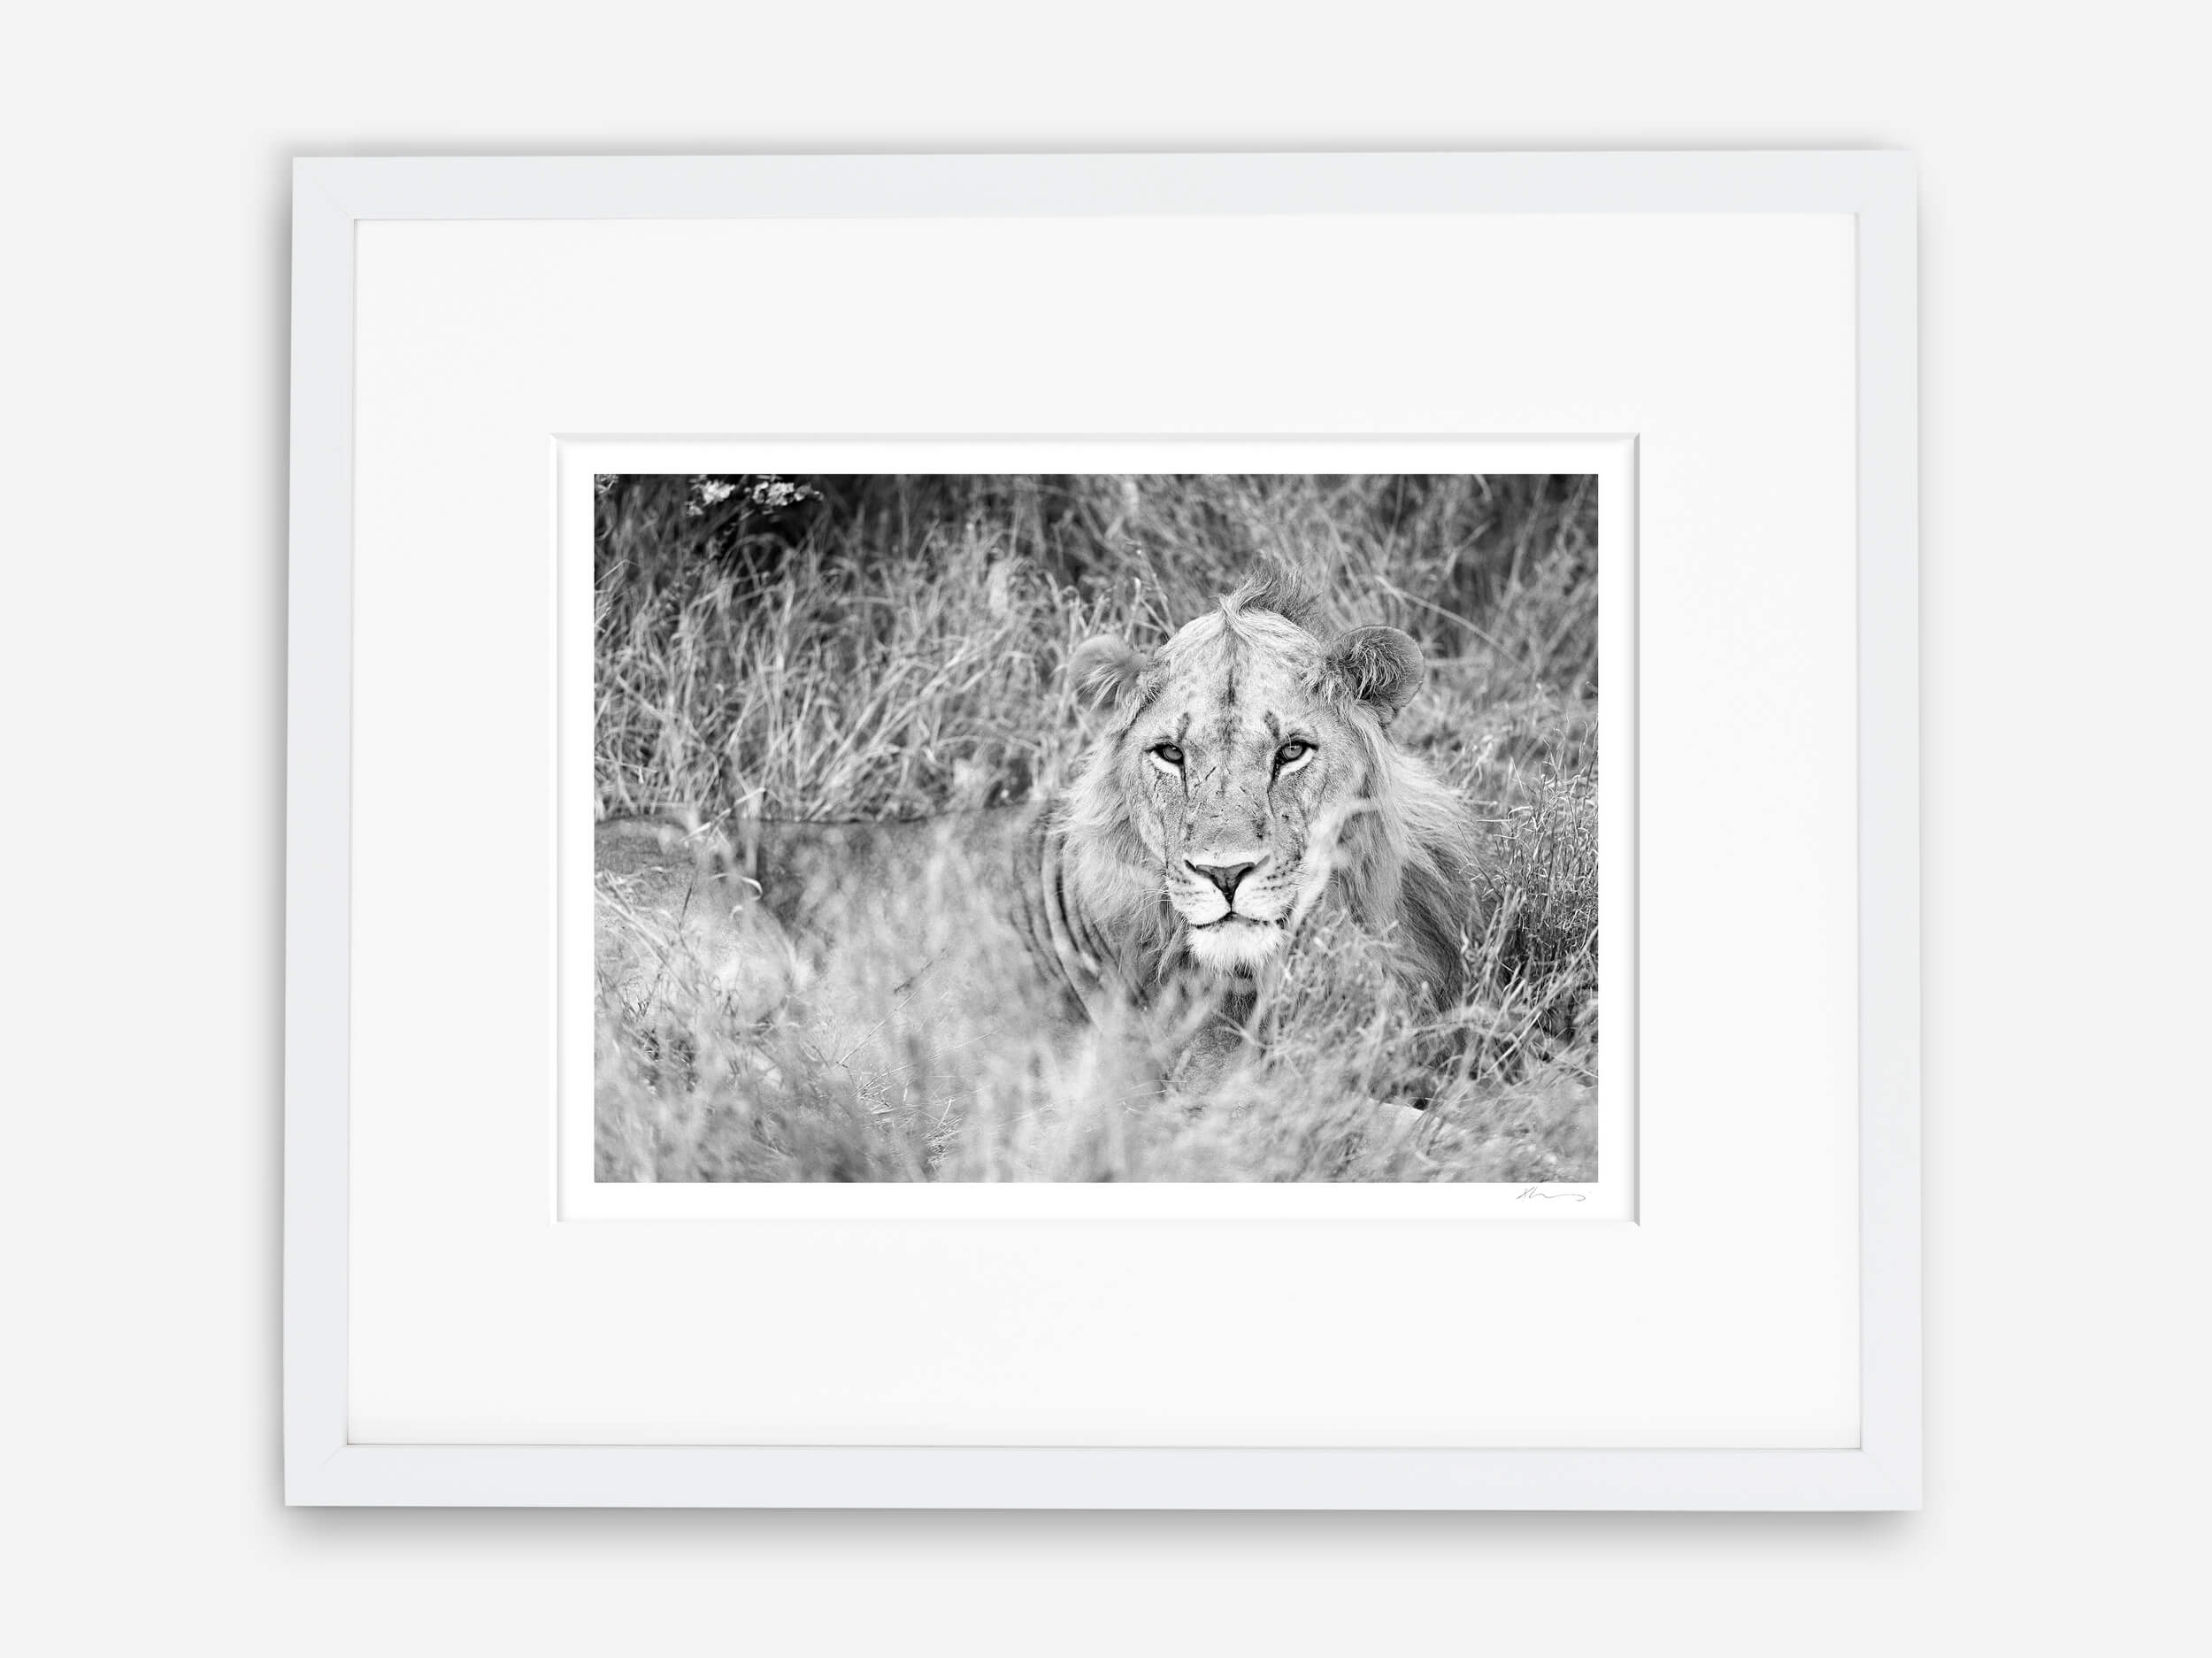 Framed fine art print of African lion does business for good at Render Loyalty